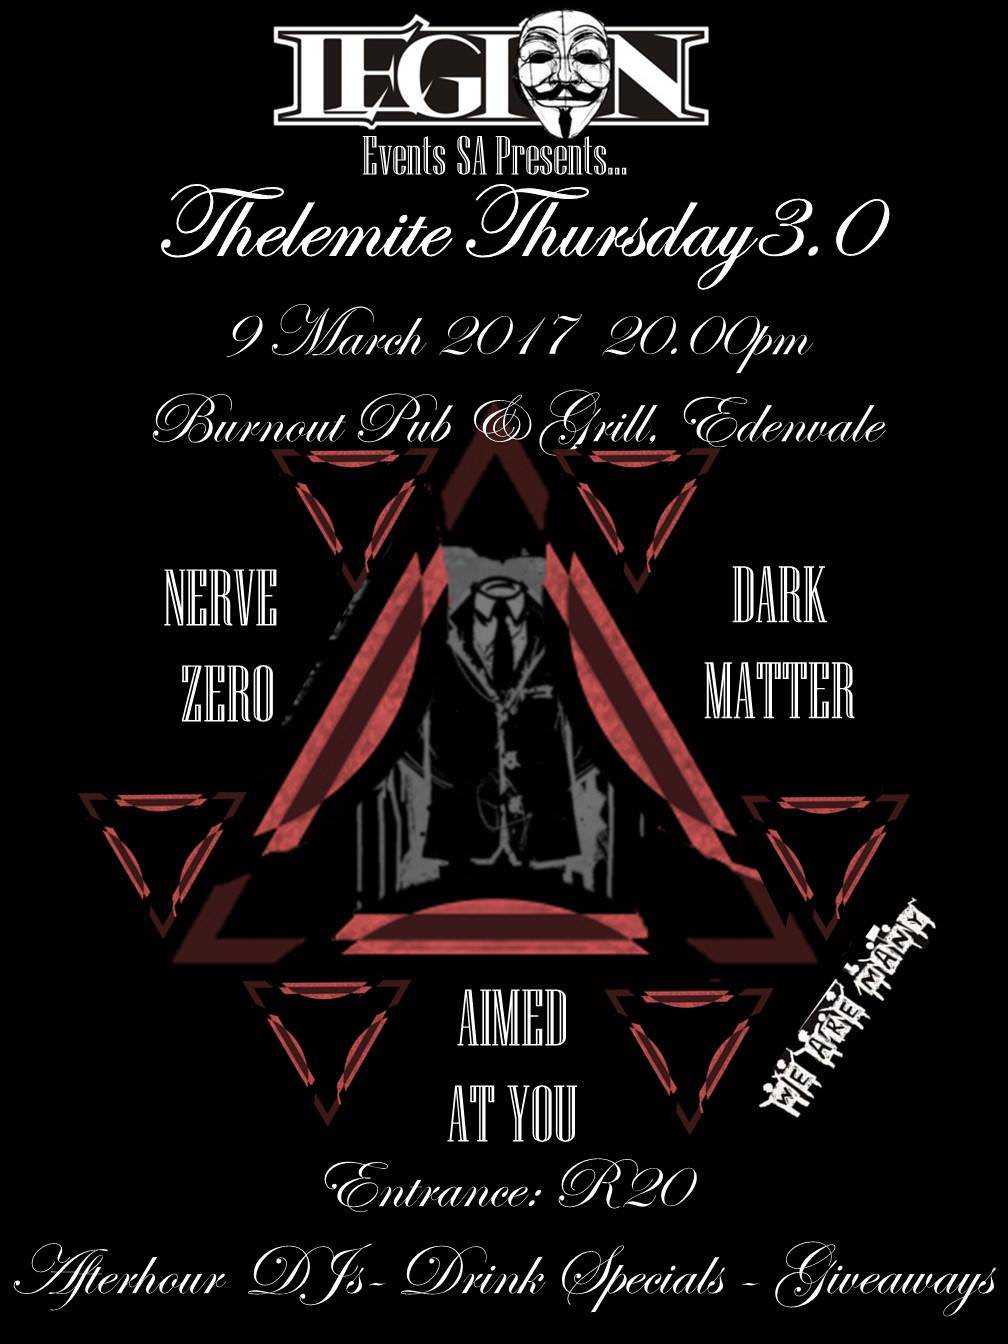 Thelemite Thursday 3.0 – Trinity